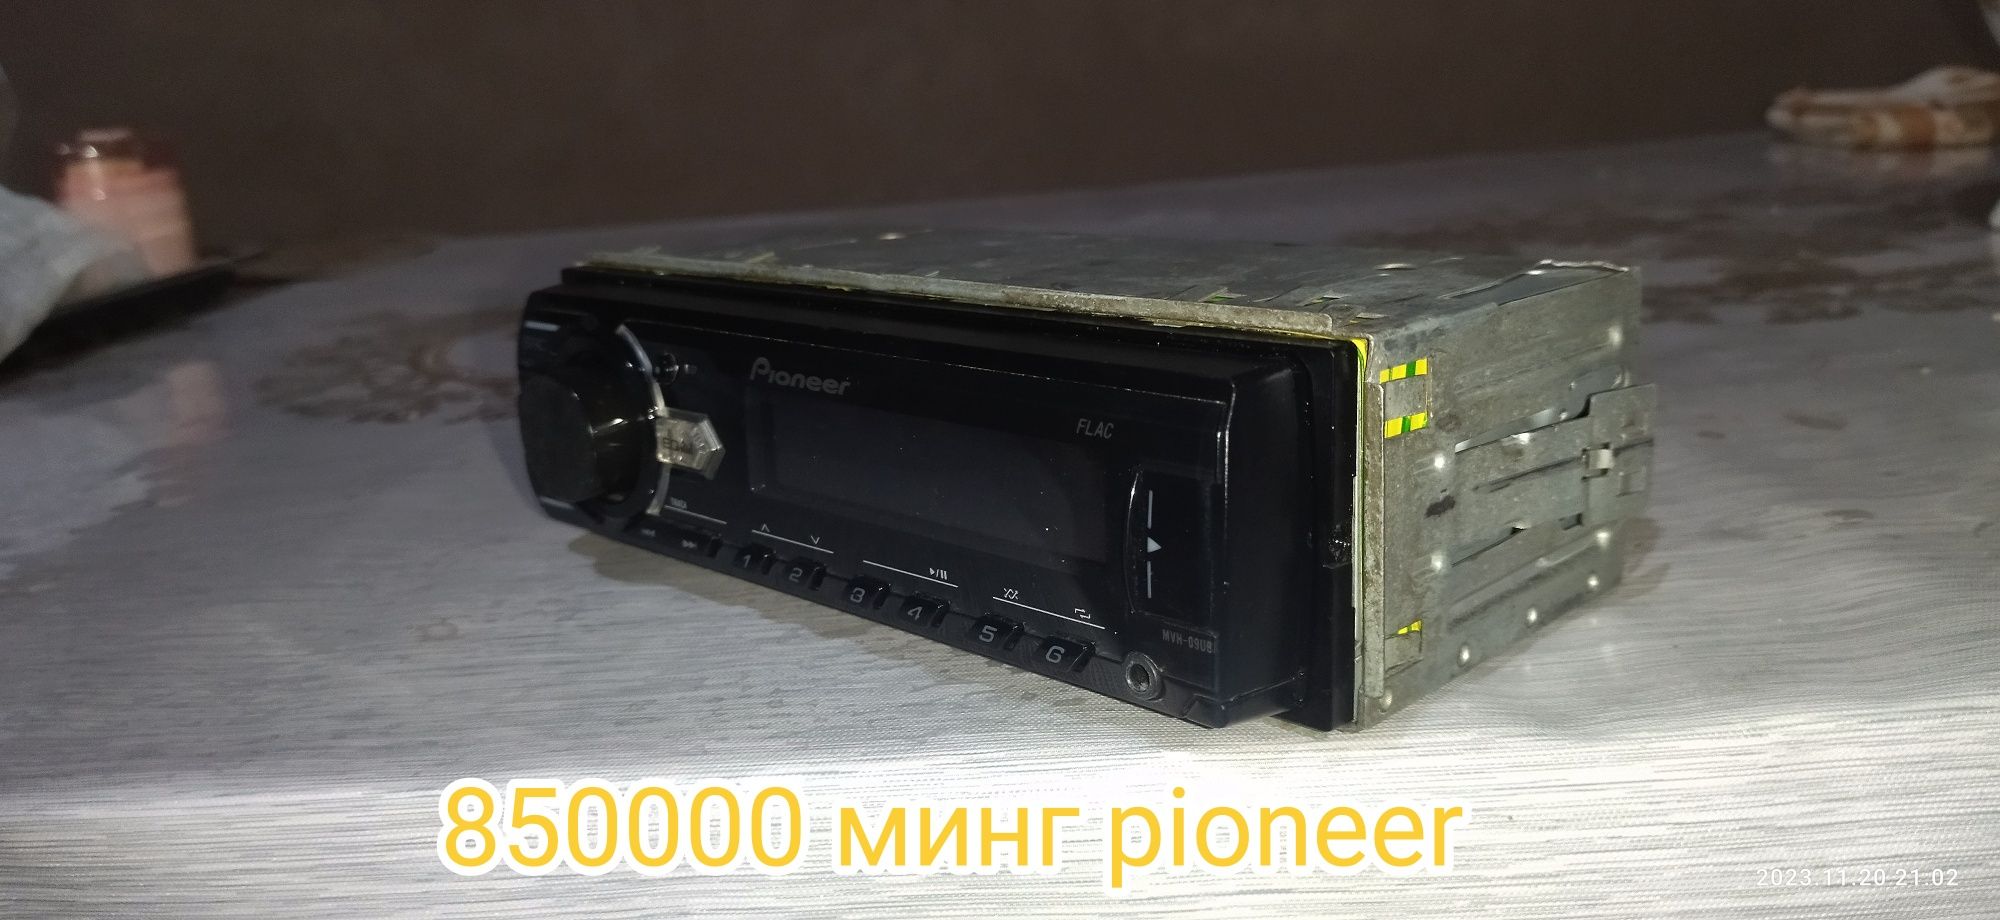 Pioneer магнитофон